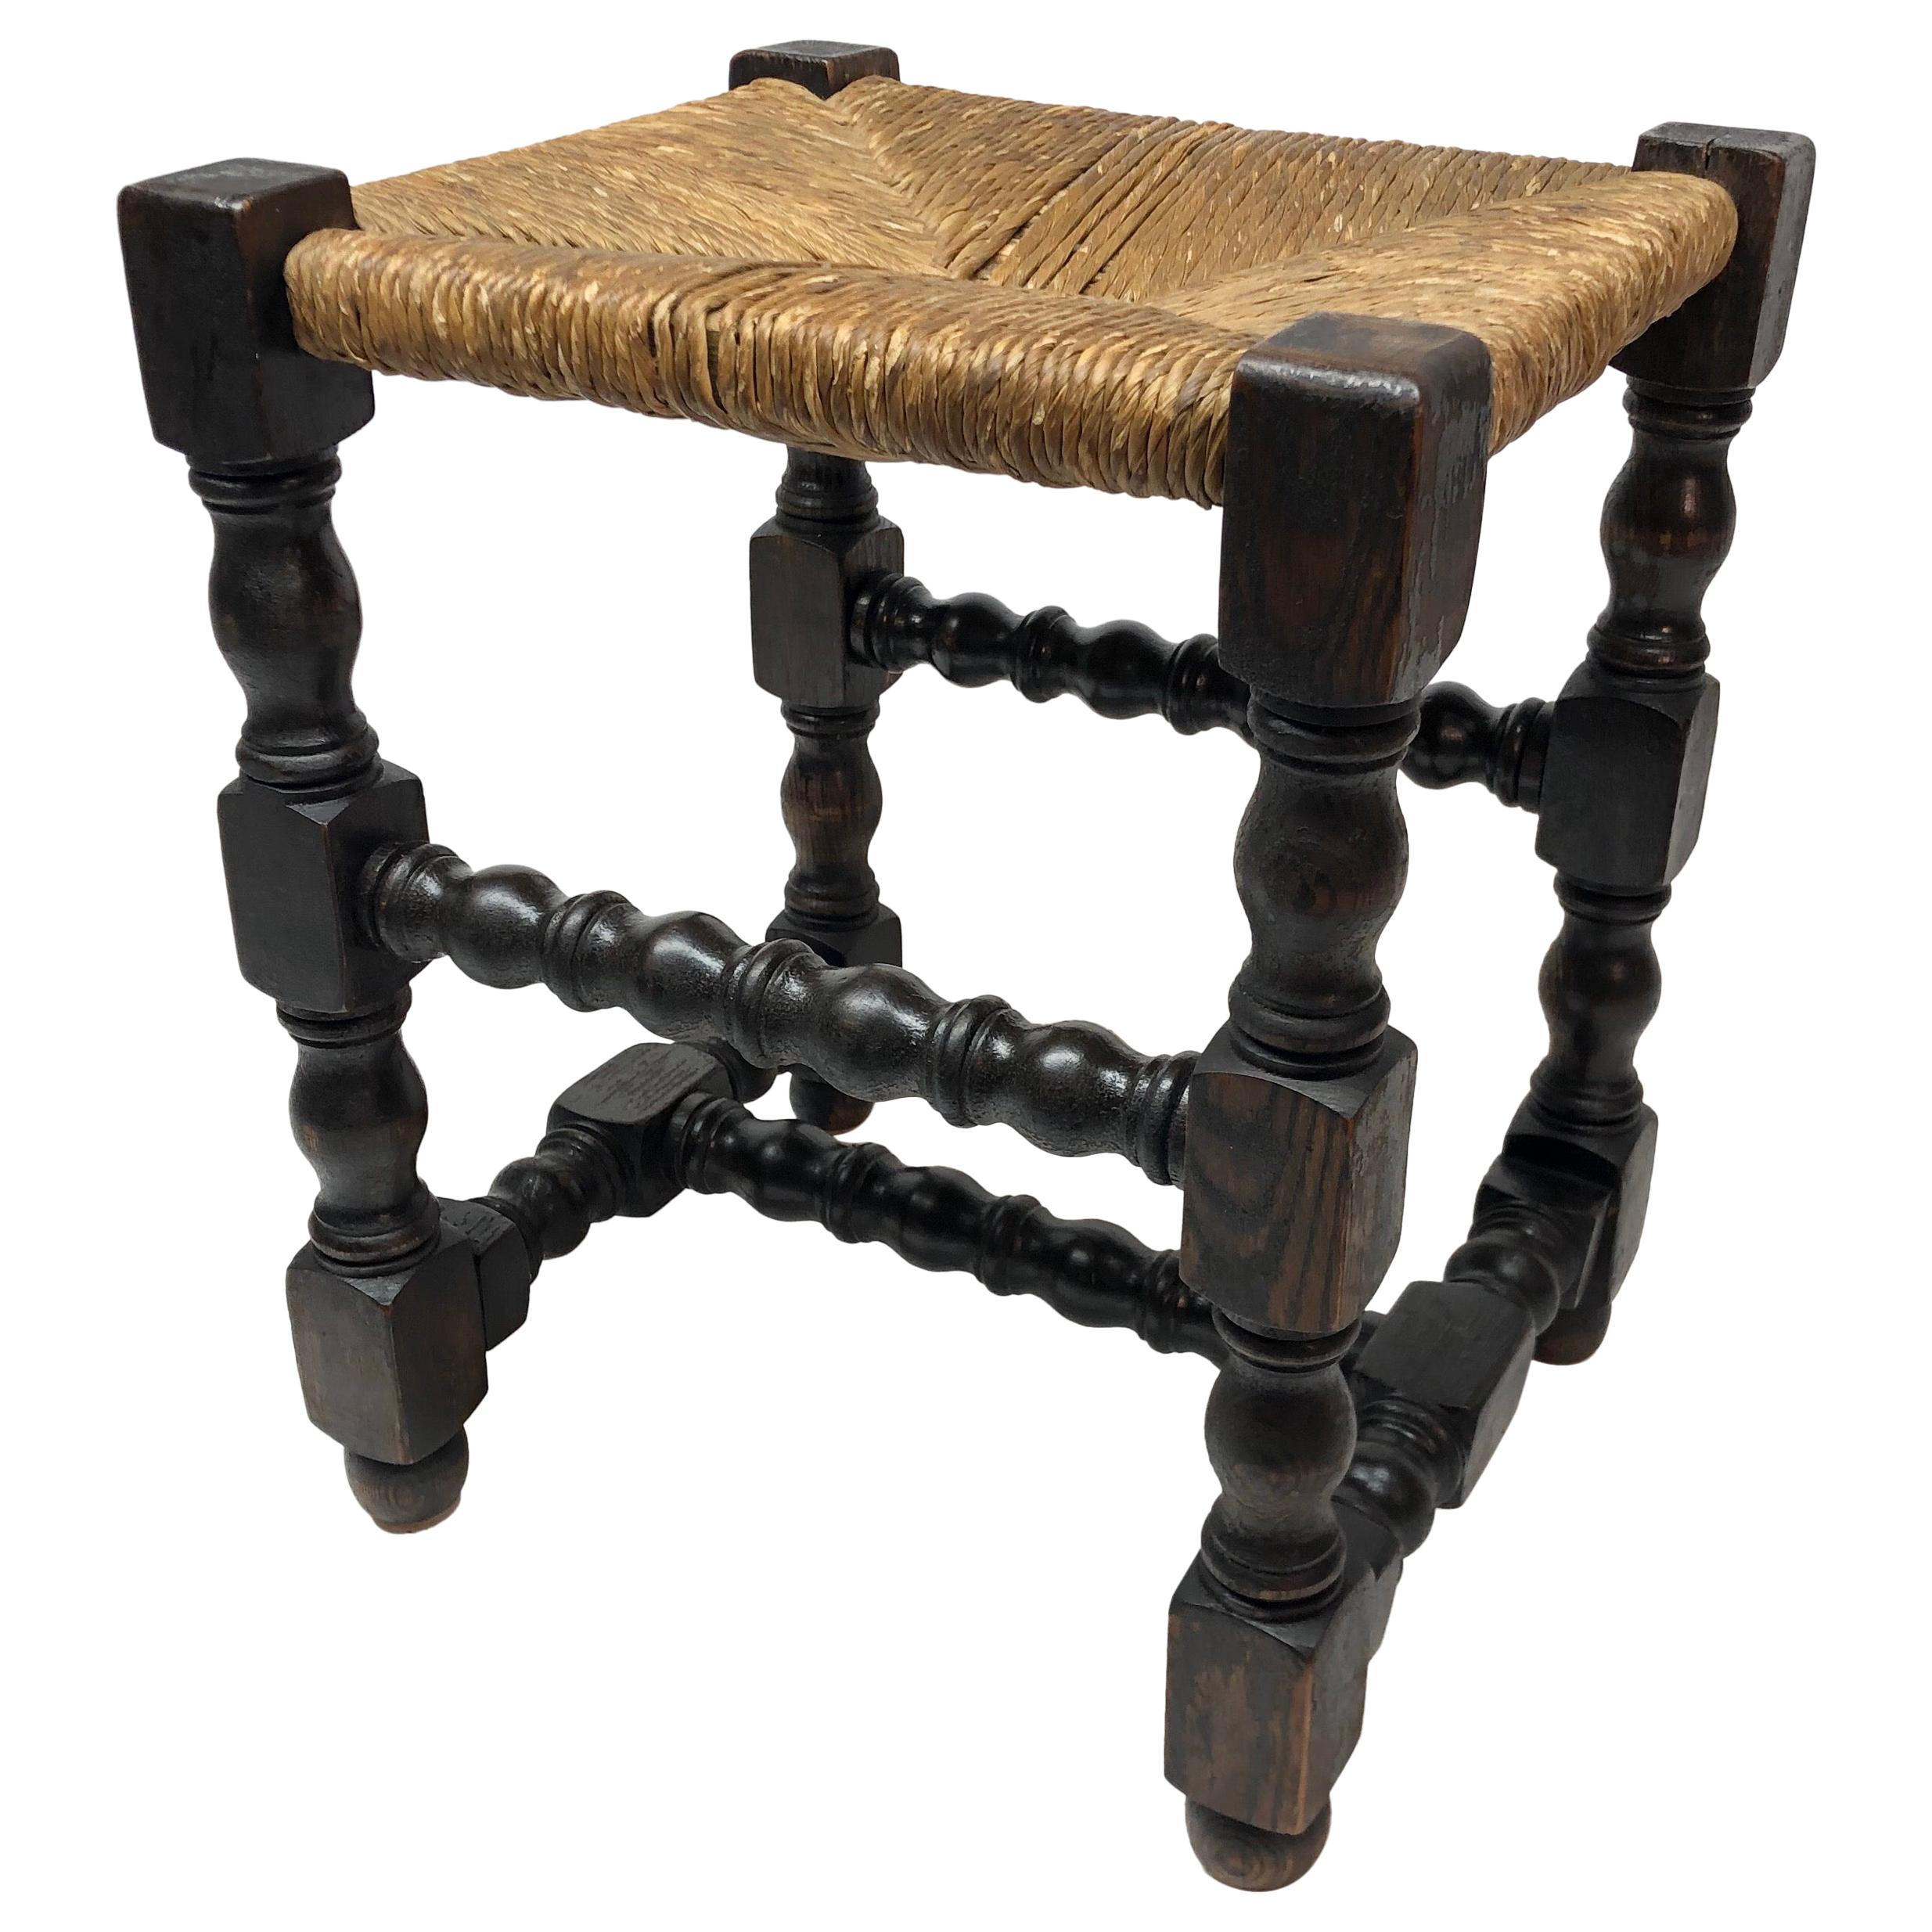 19th Century English Wood Stool with Rush Seat